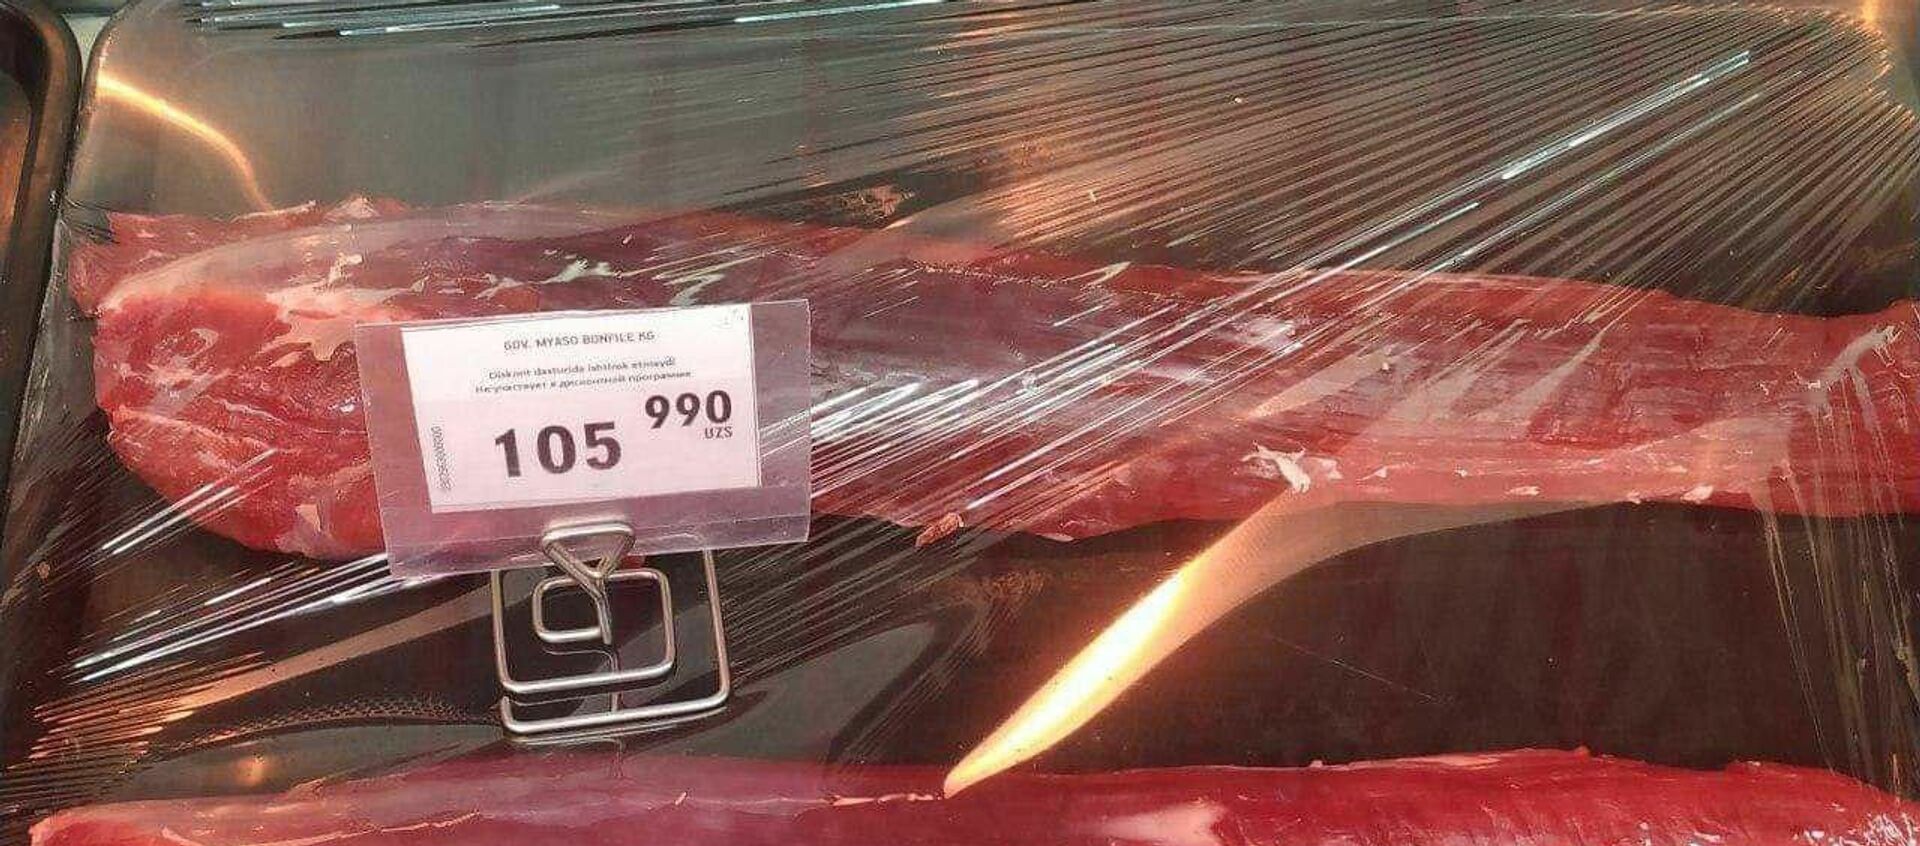 Мясо за 106 тысяч сумов: снимок из супермаркета возмутил узбекистанцев - Sputnik Узбекистан, 1920, 14.08.2019